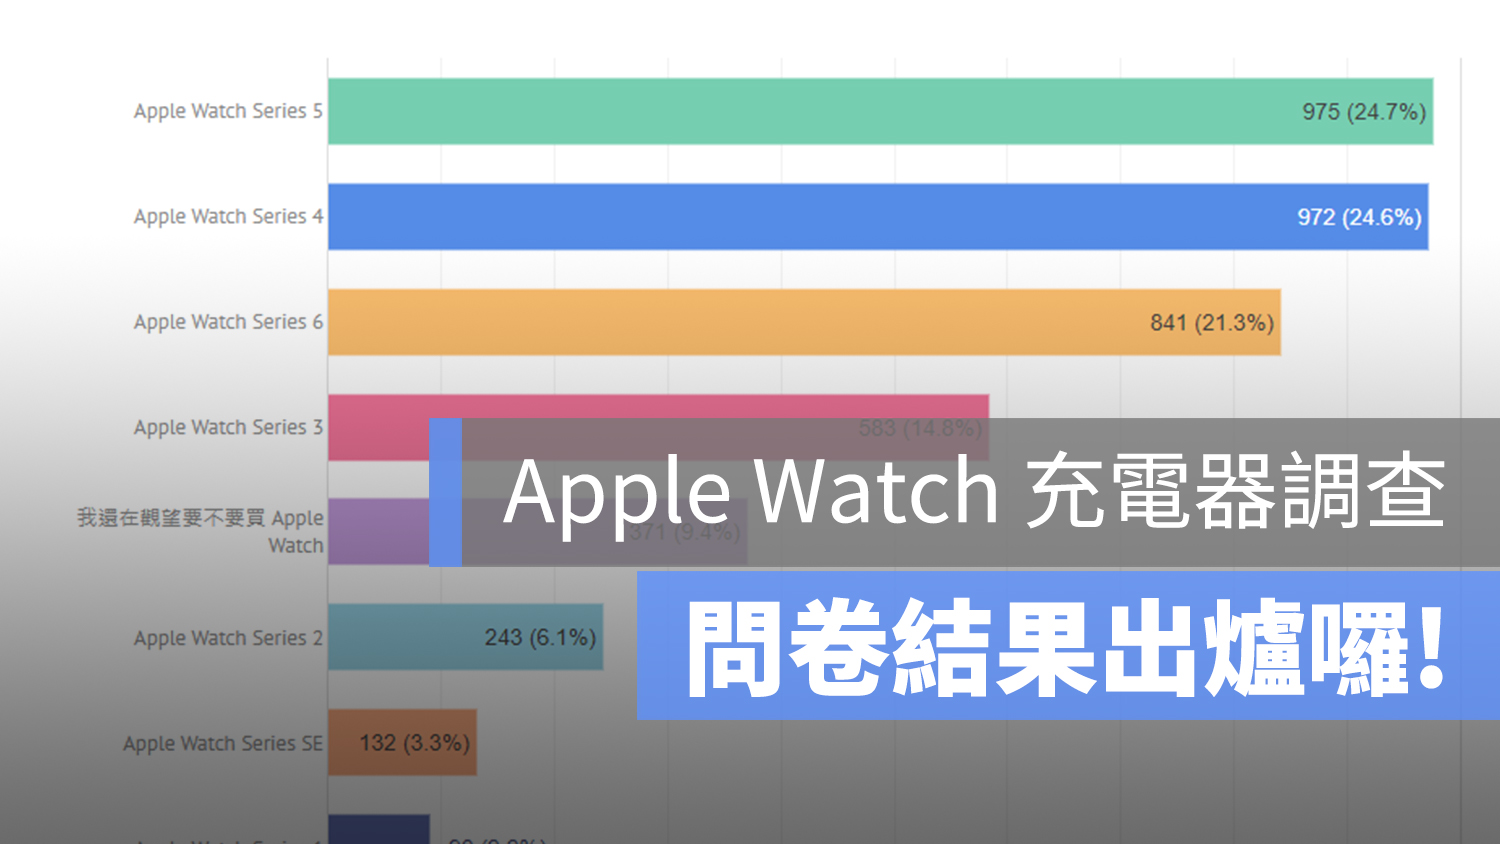 Apple Watch 問卷調查